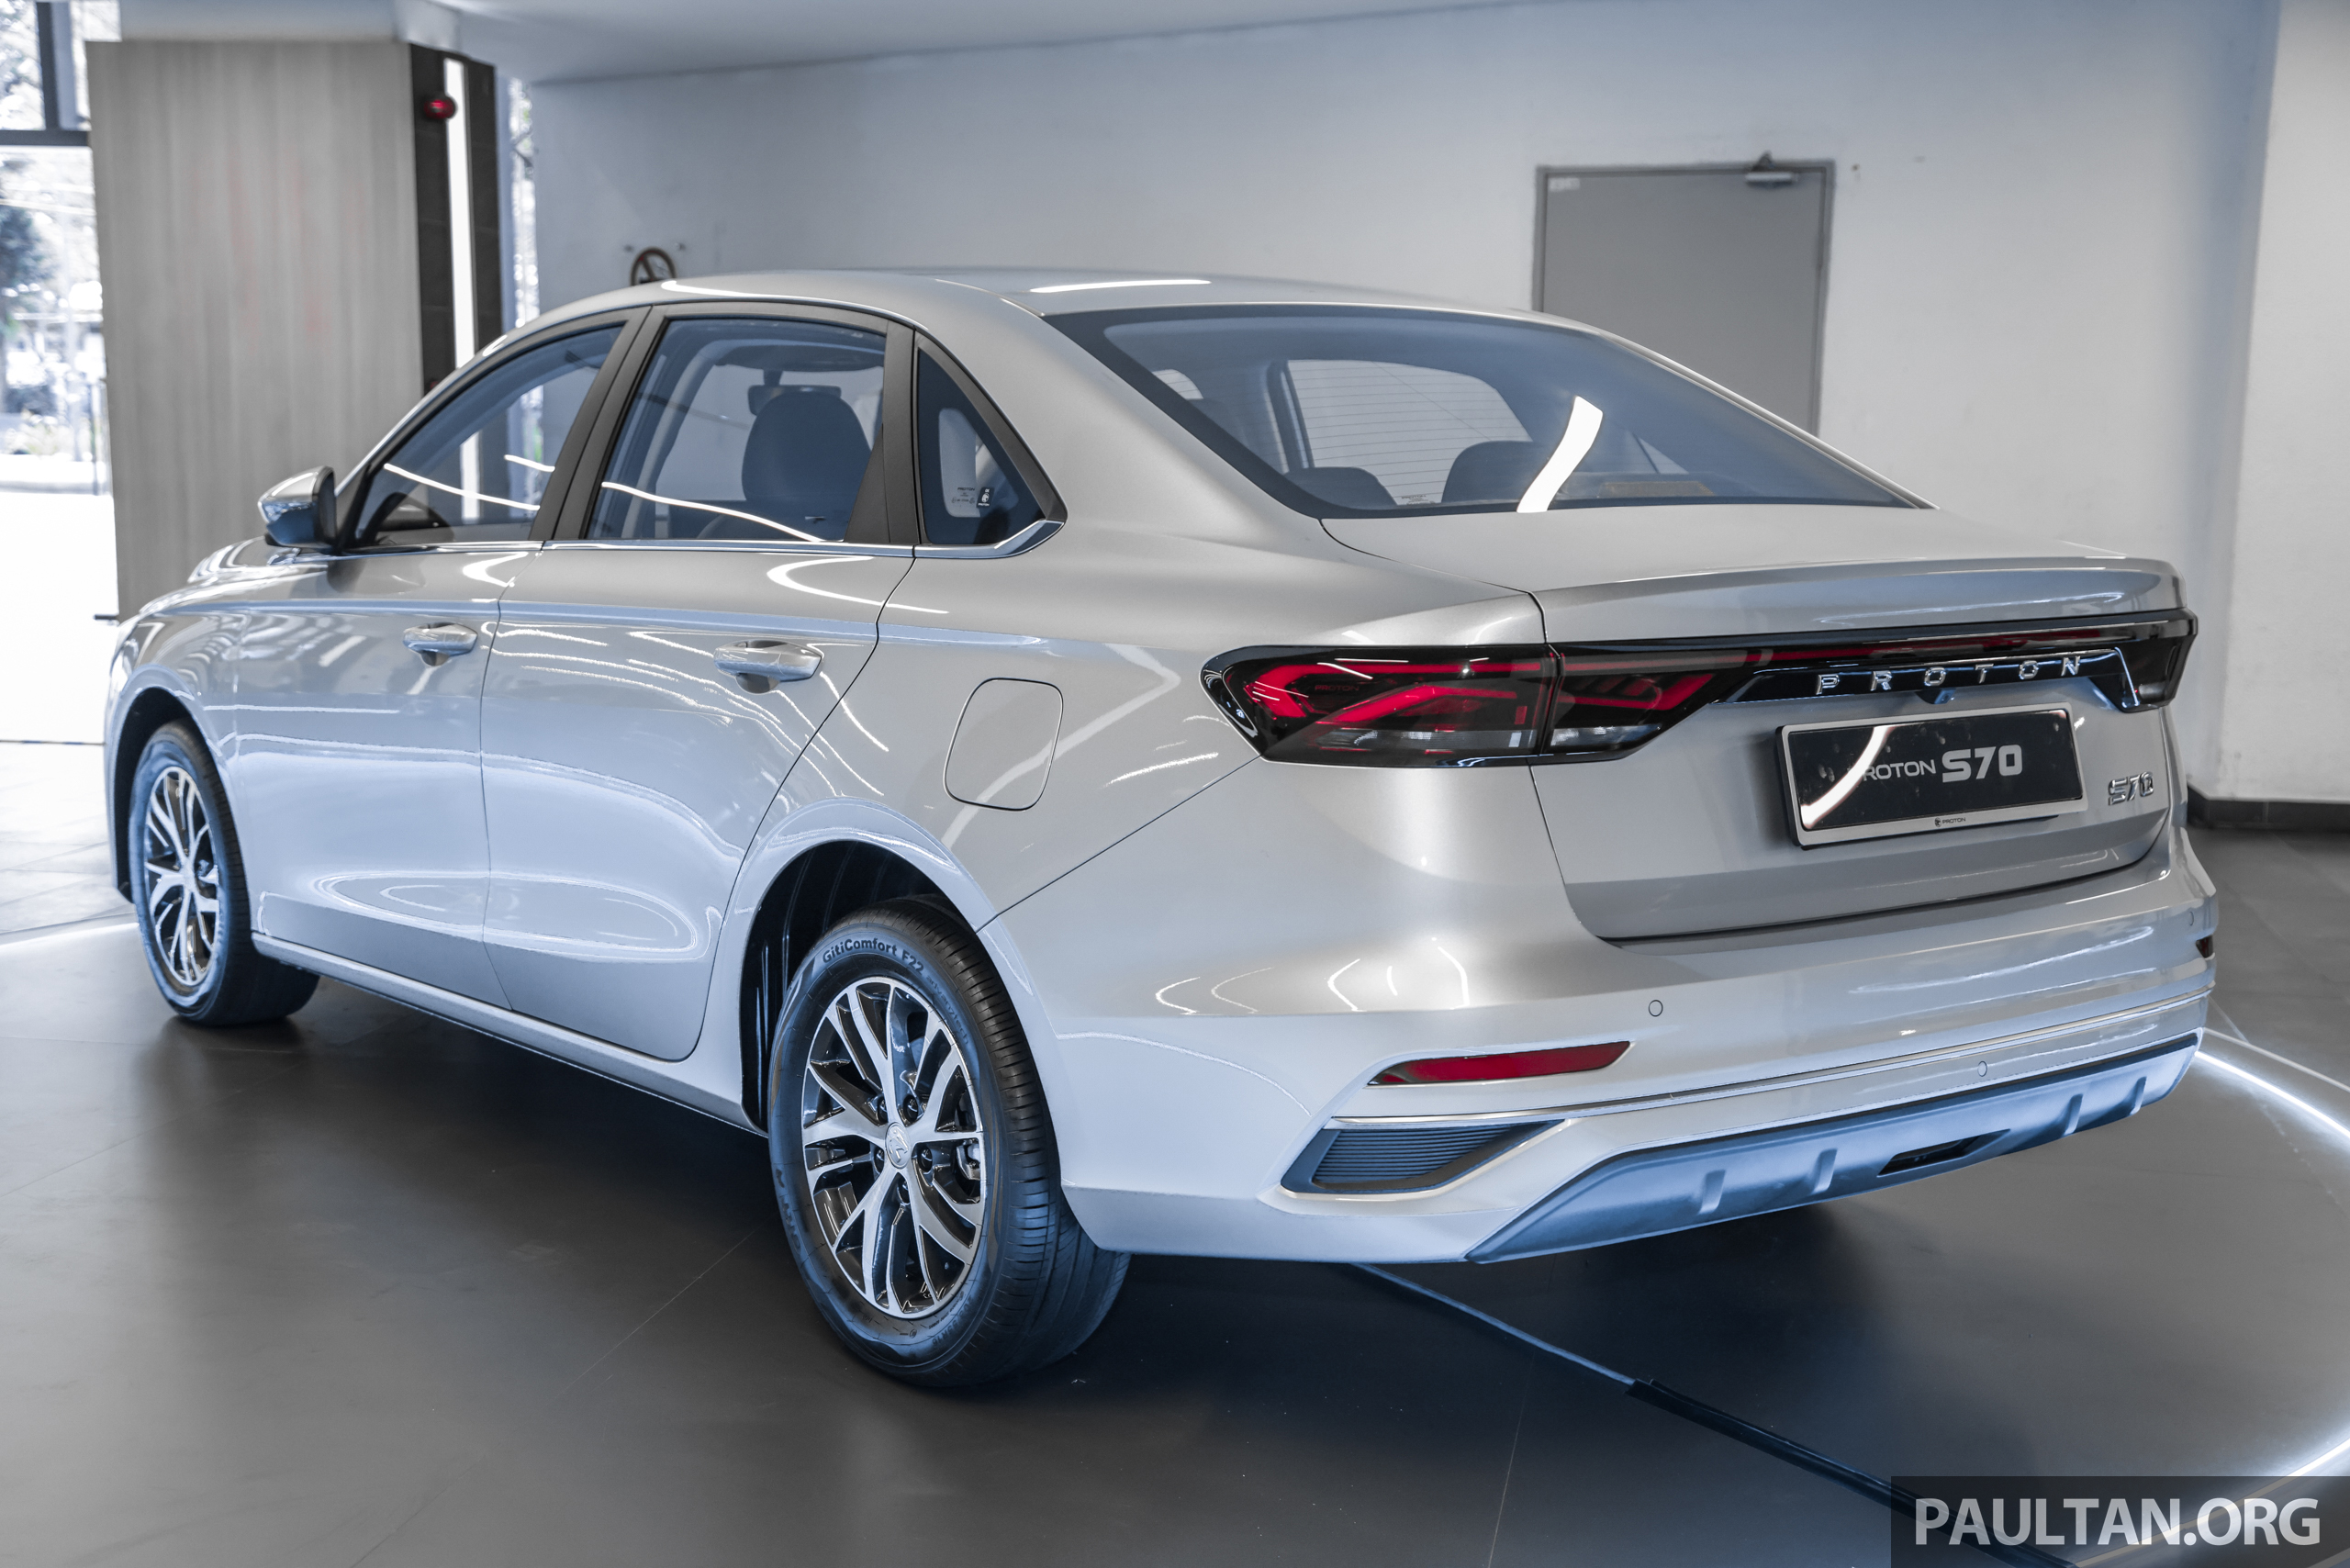 Proton S70 销量激增60%成本地最畅销C-Segment Sedan